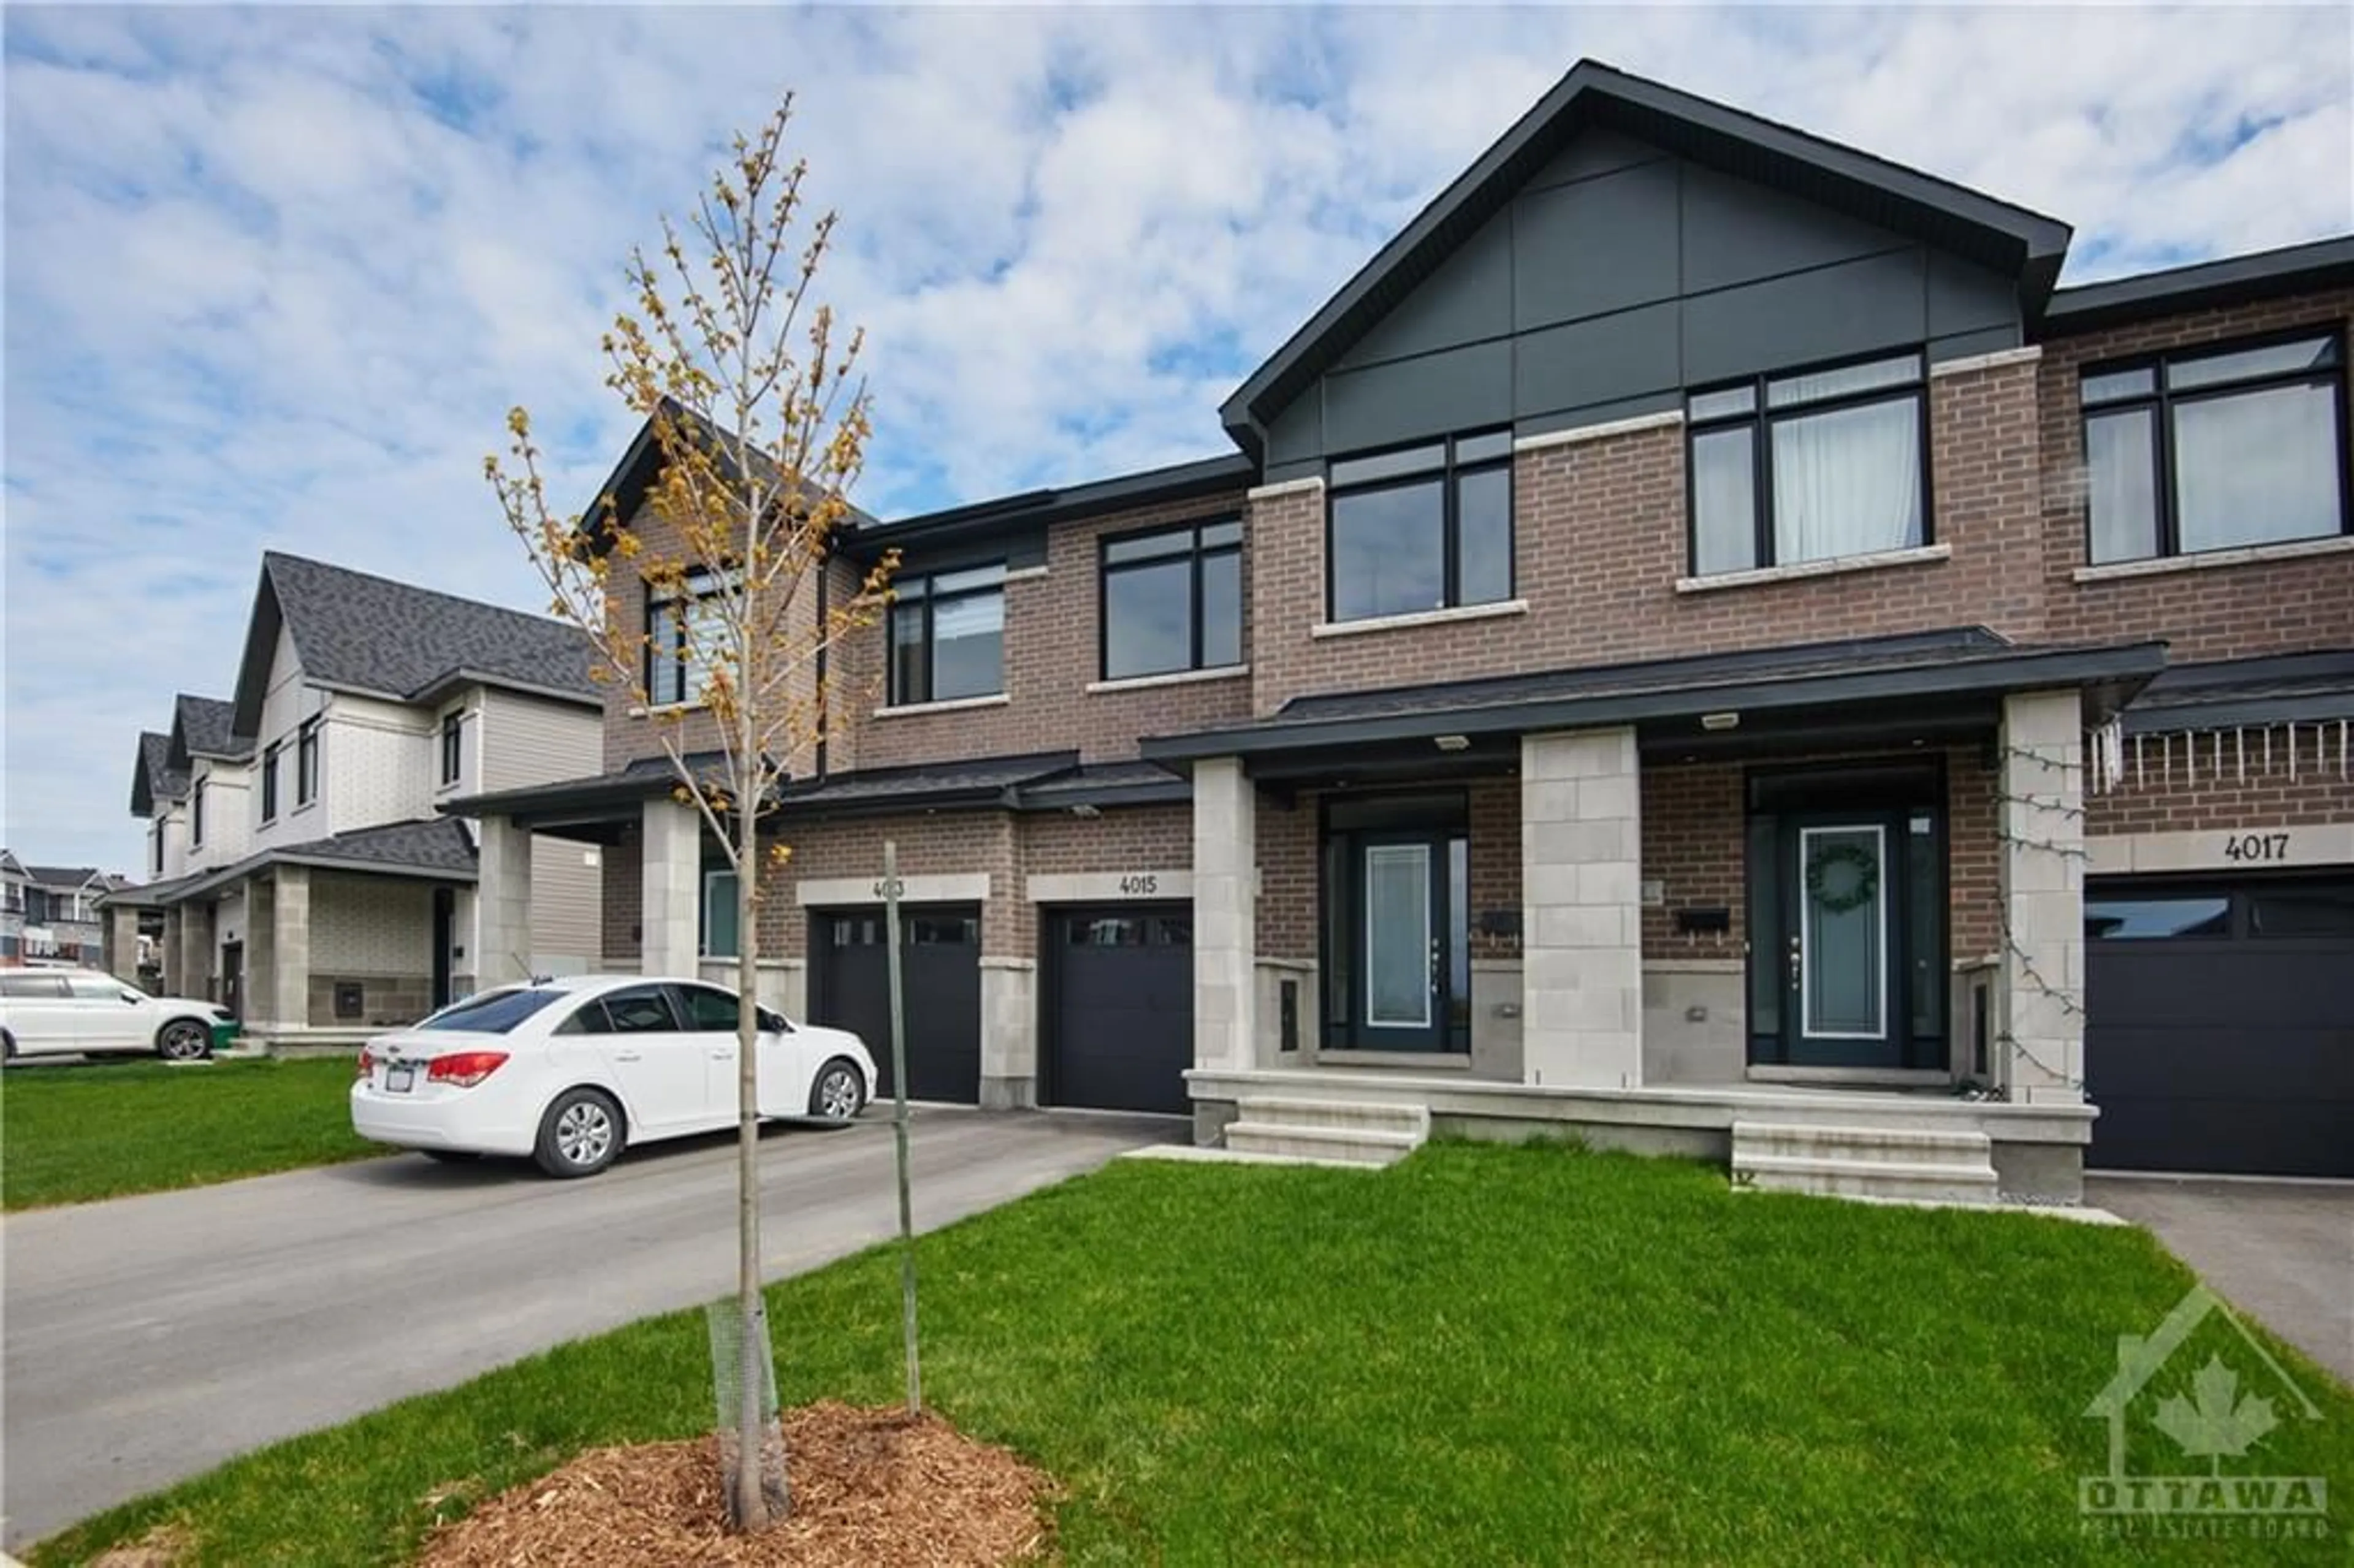 Frontside or backside of a home for 4015 JOCKVALE Rd, Ottawa Ontario K2J 6Y8